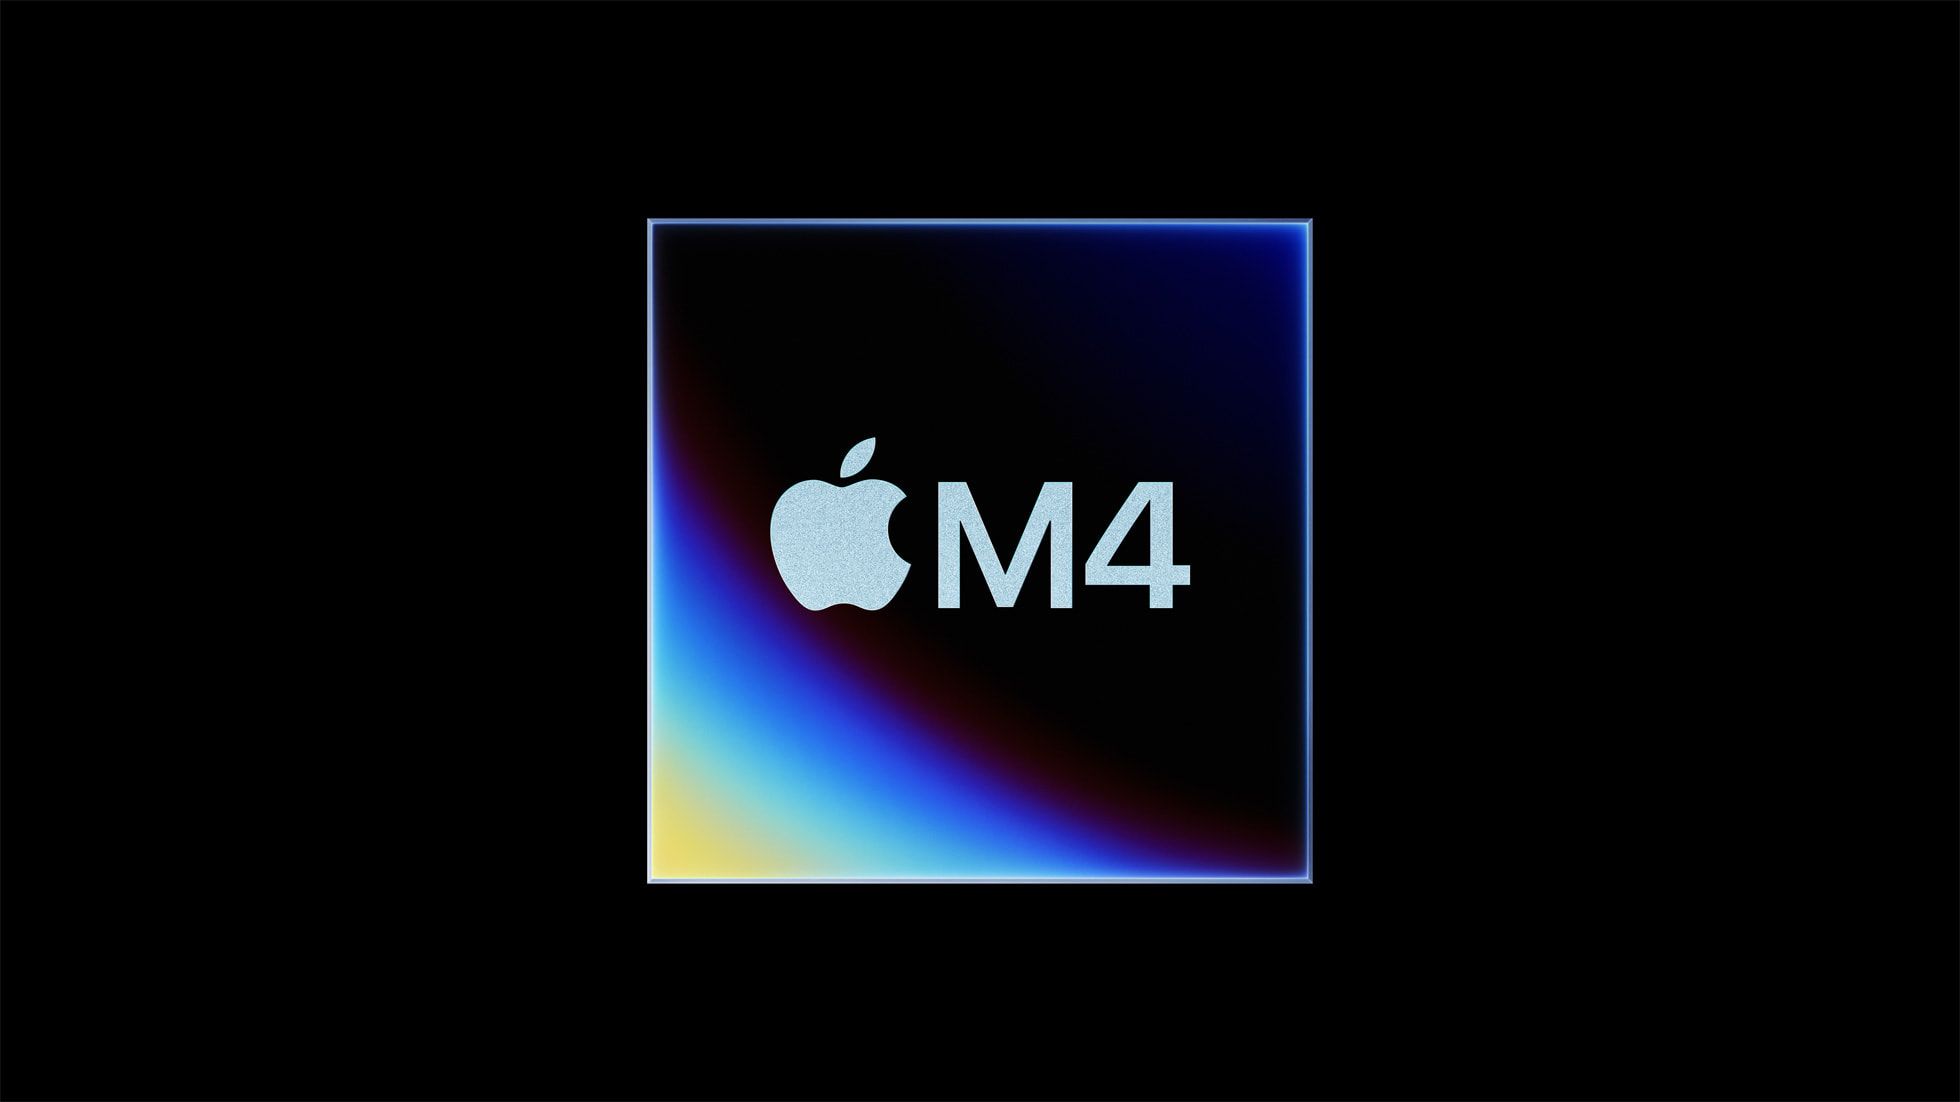 Apple's M4 chip render on a black background.